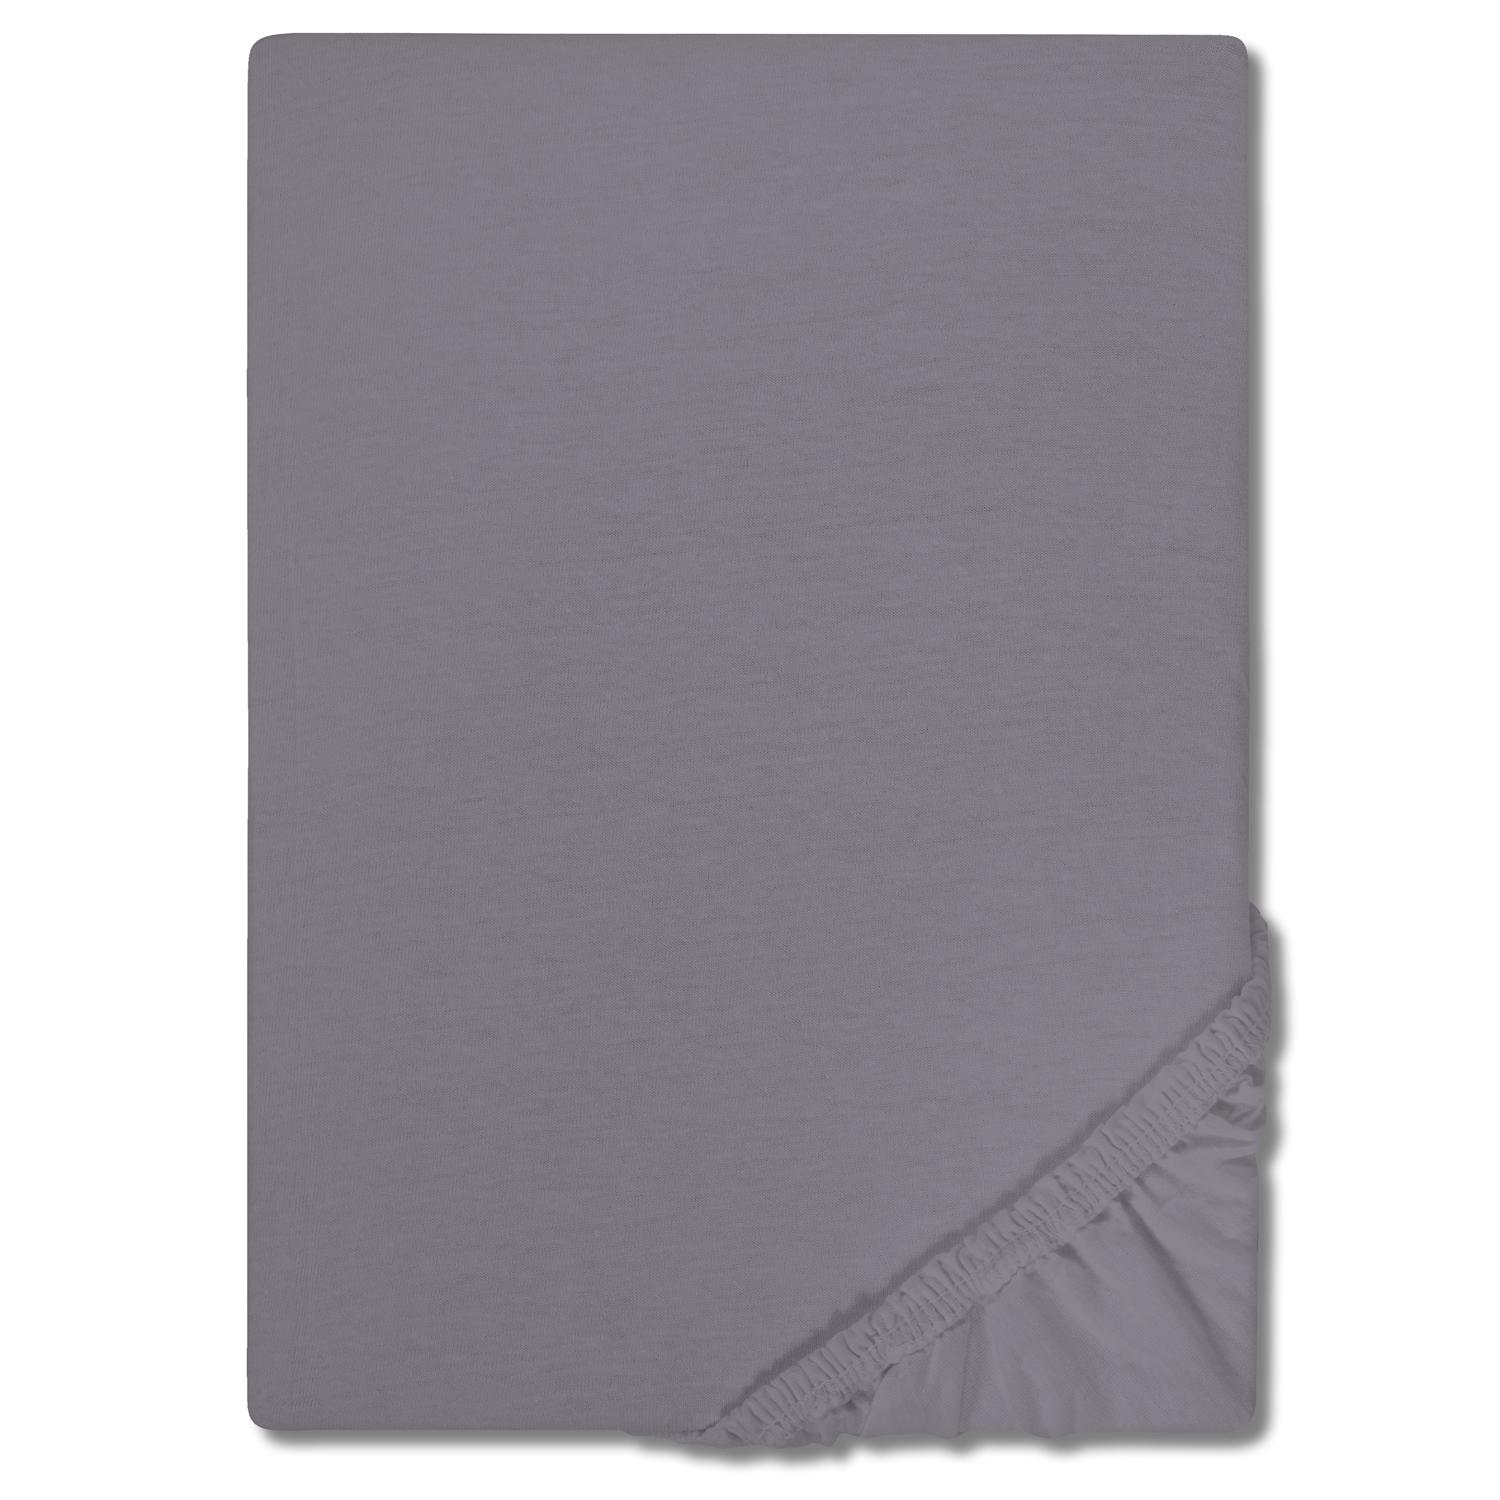 CloudComfort Basic Lenjerie de pat extensibilă Jersey stretch gri închis 90 x 190 - 100 x 200 cm